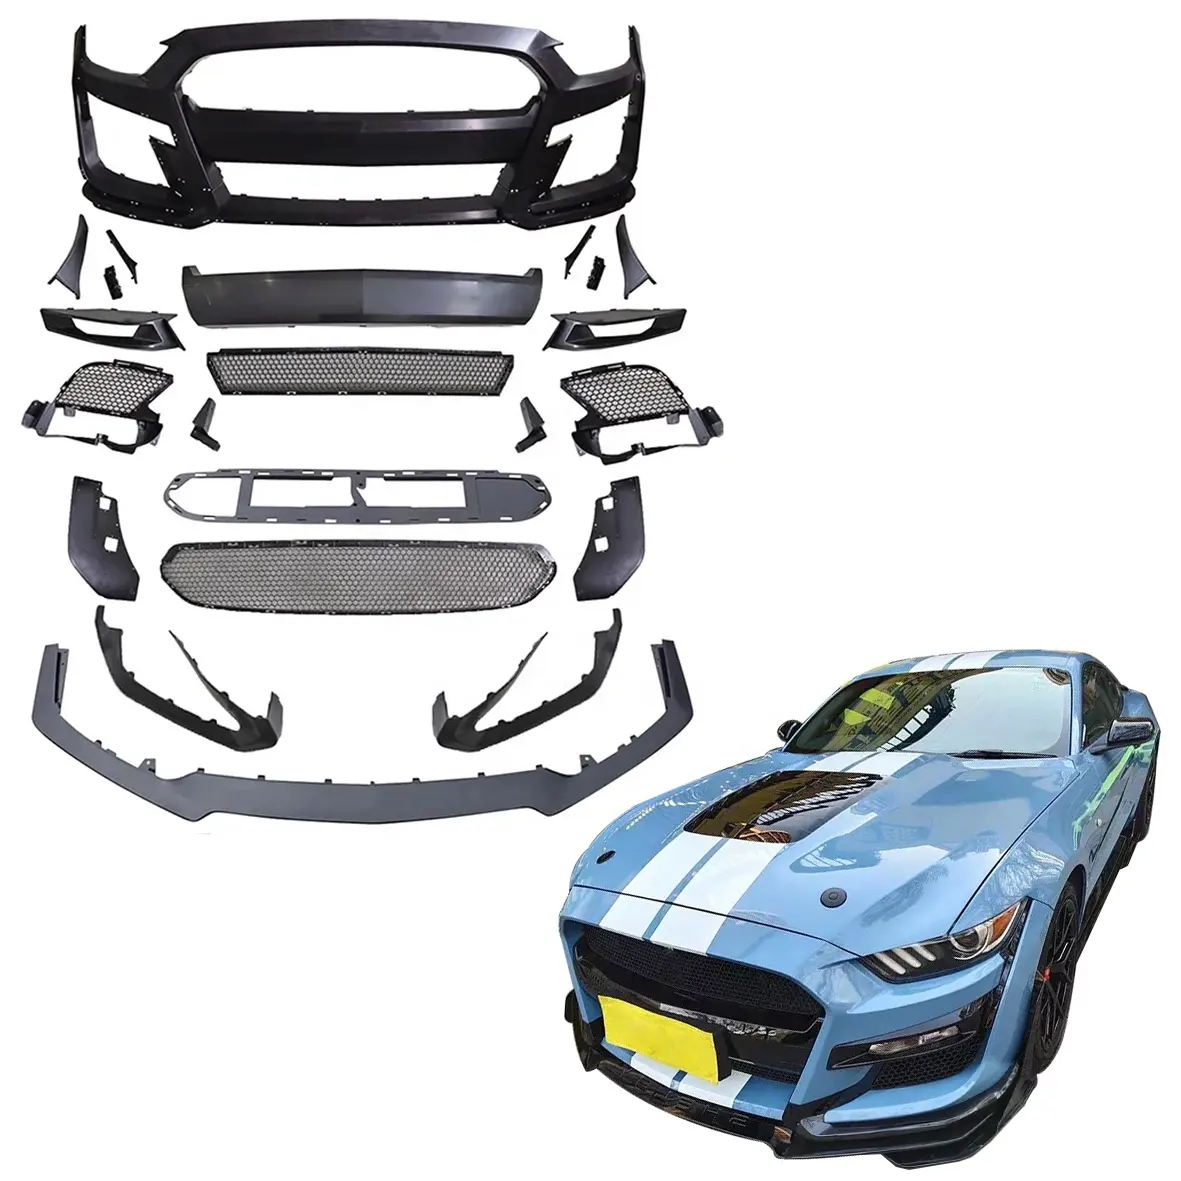 B SPM parachoques labio difusor Spoiler falda lateral cuerpo Kit para Ford Mustang GT500 Shelby estilo completo cuerpo Kits accesorios 2015-2017